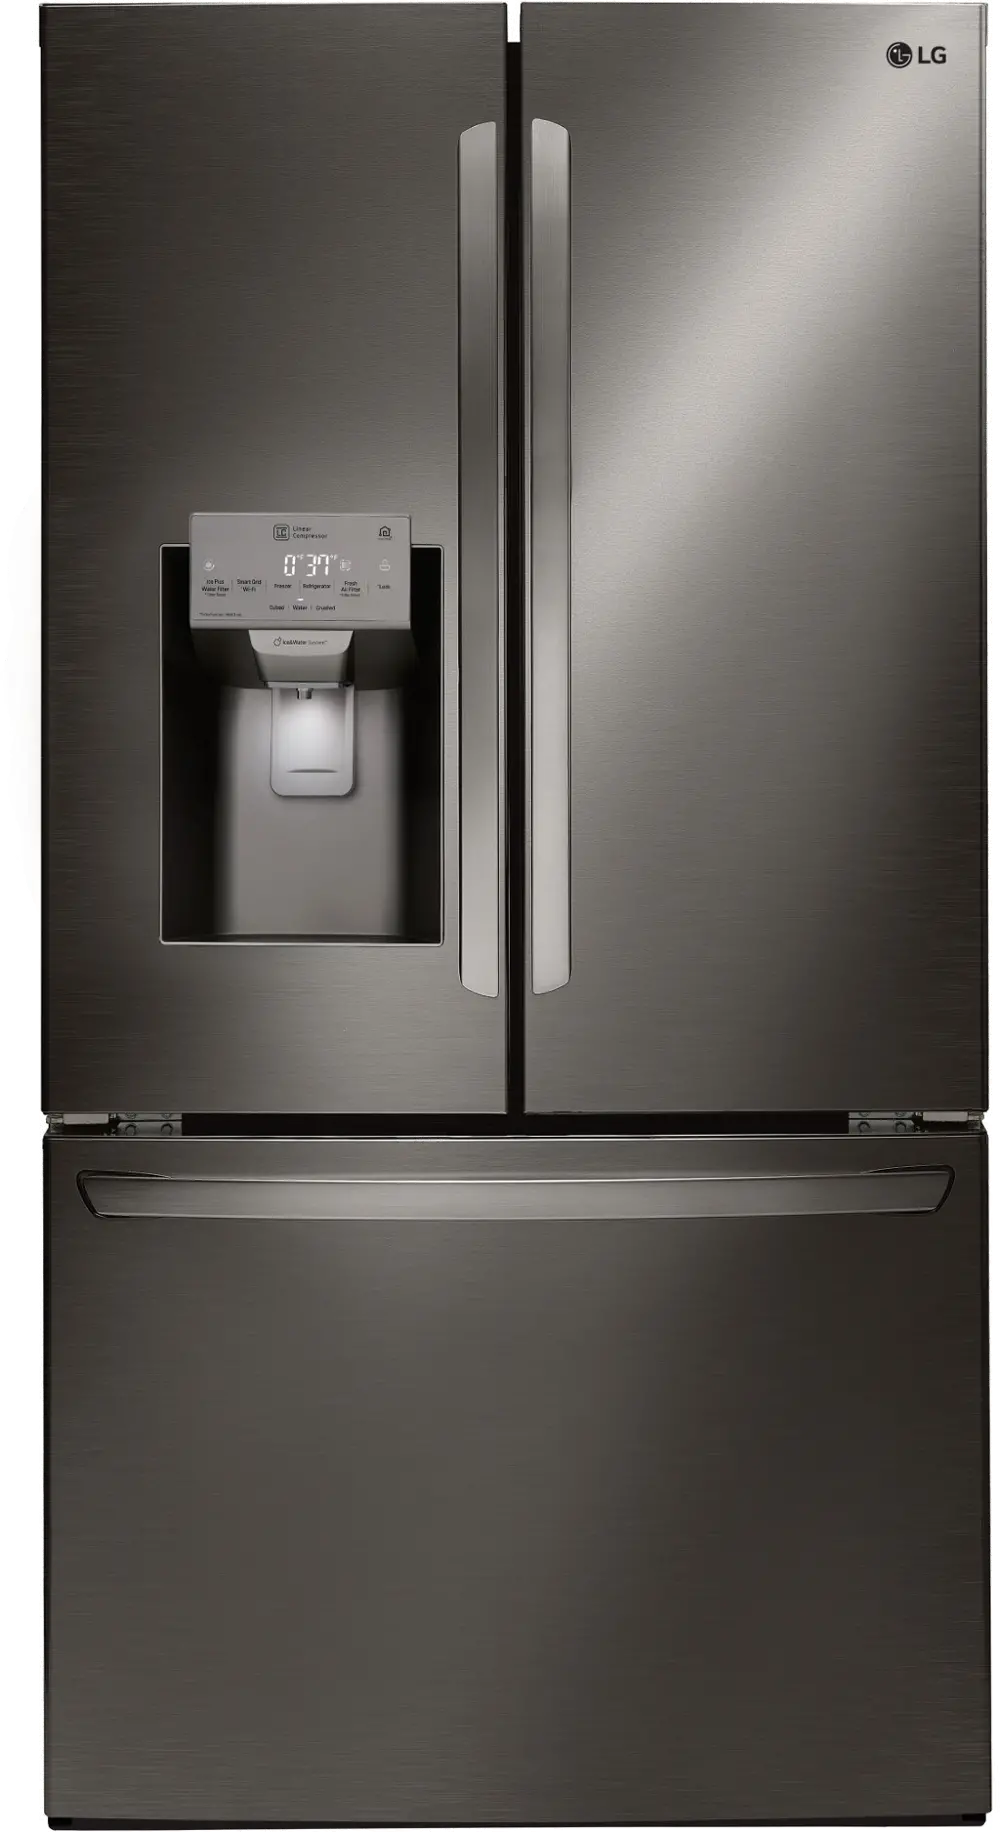 LFXC22526D LG 22.1 cu ft French Door Refrigerator - Counter Depth Black Stainless Steel-1